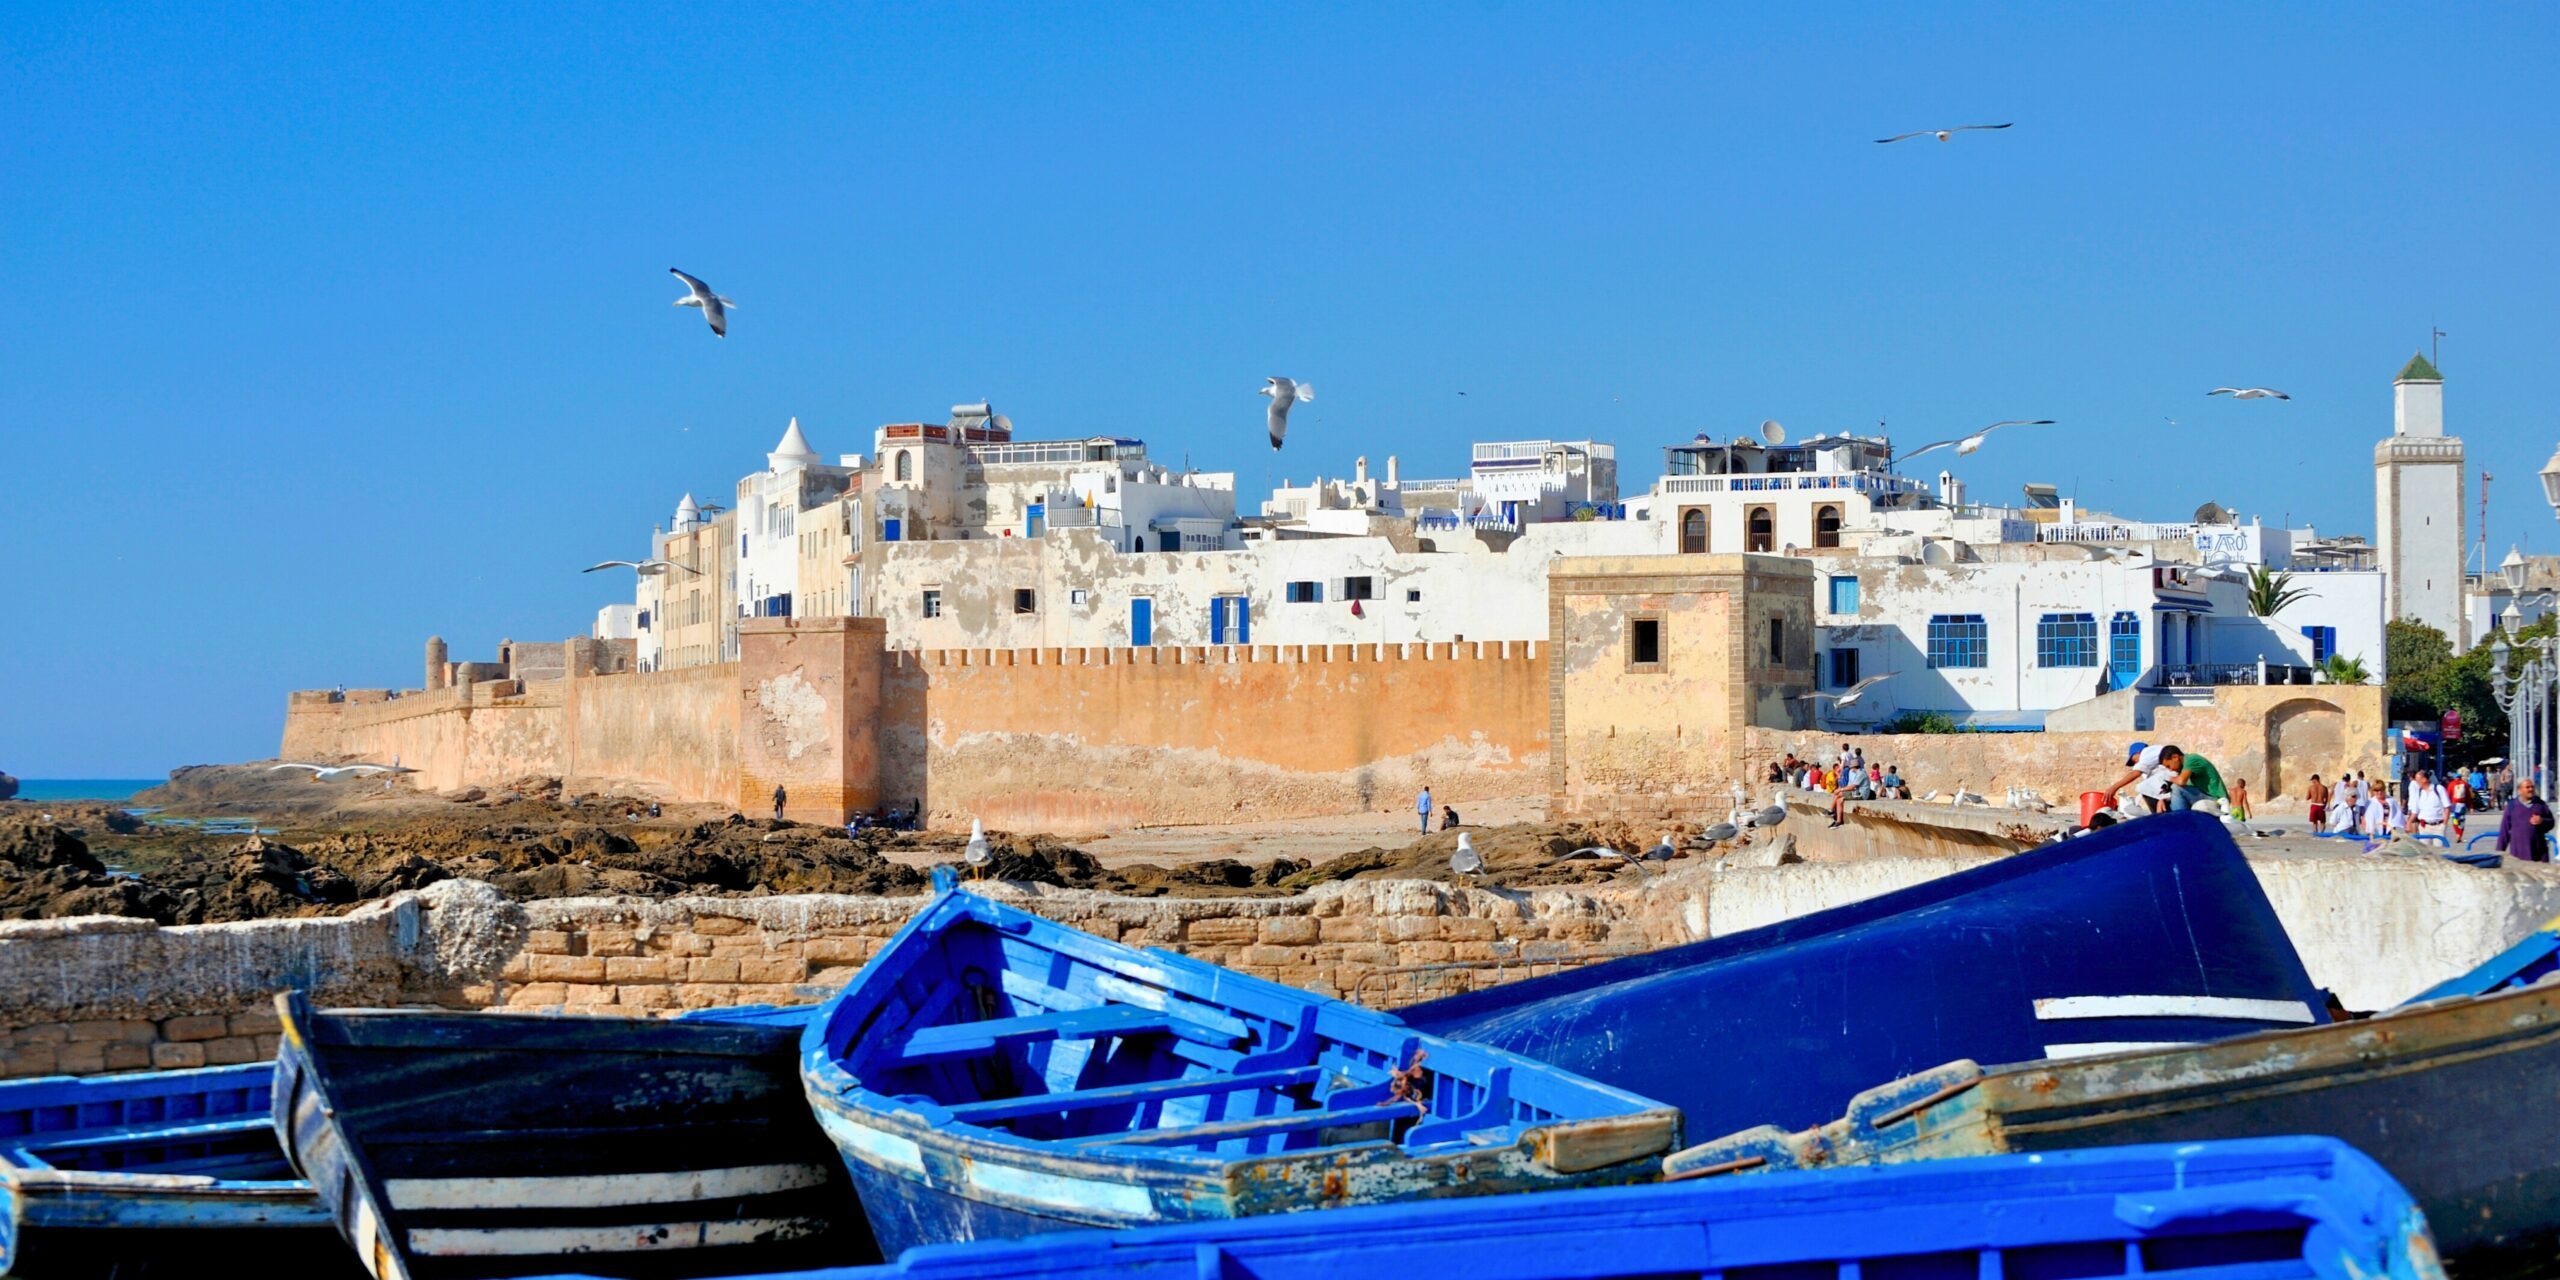 Que faire à Essaouira, au Maroc ?